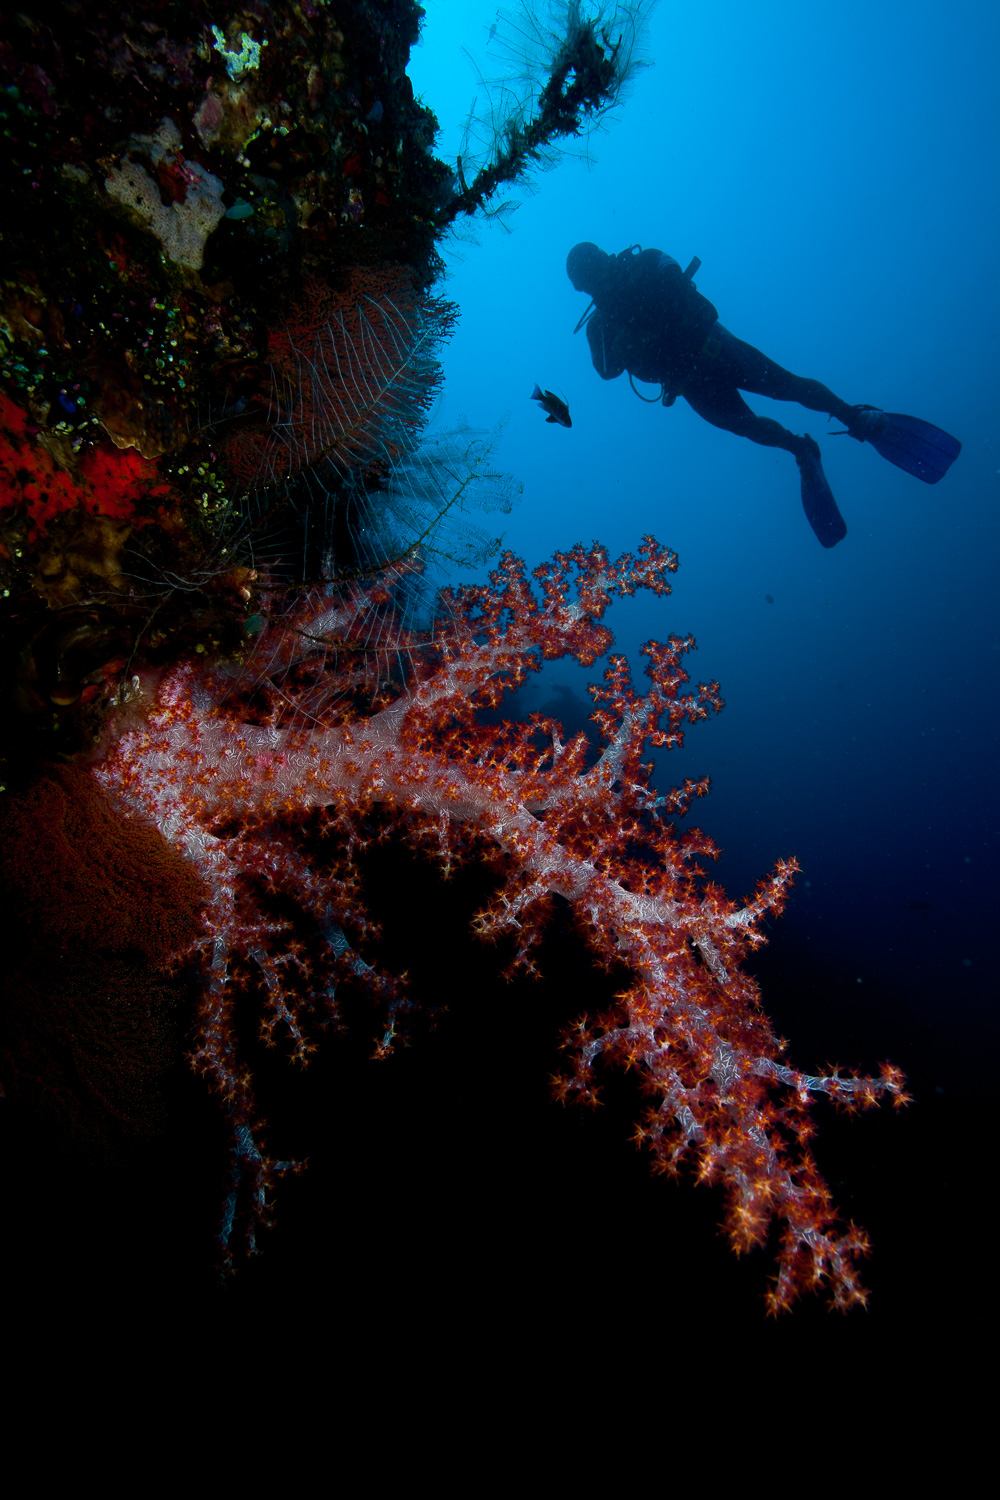 Coral suave e mergulhador / Soft coral and diver / Dendronephthya